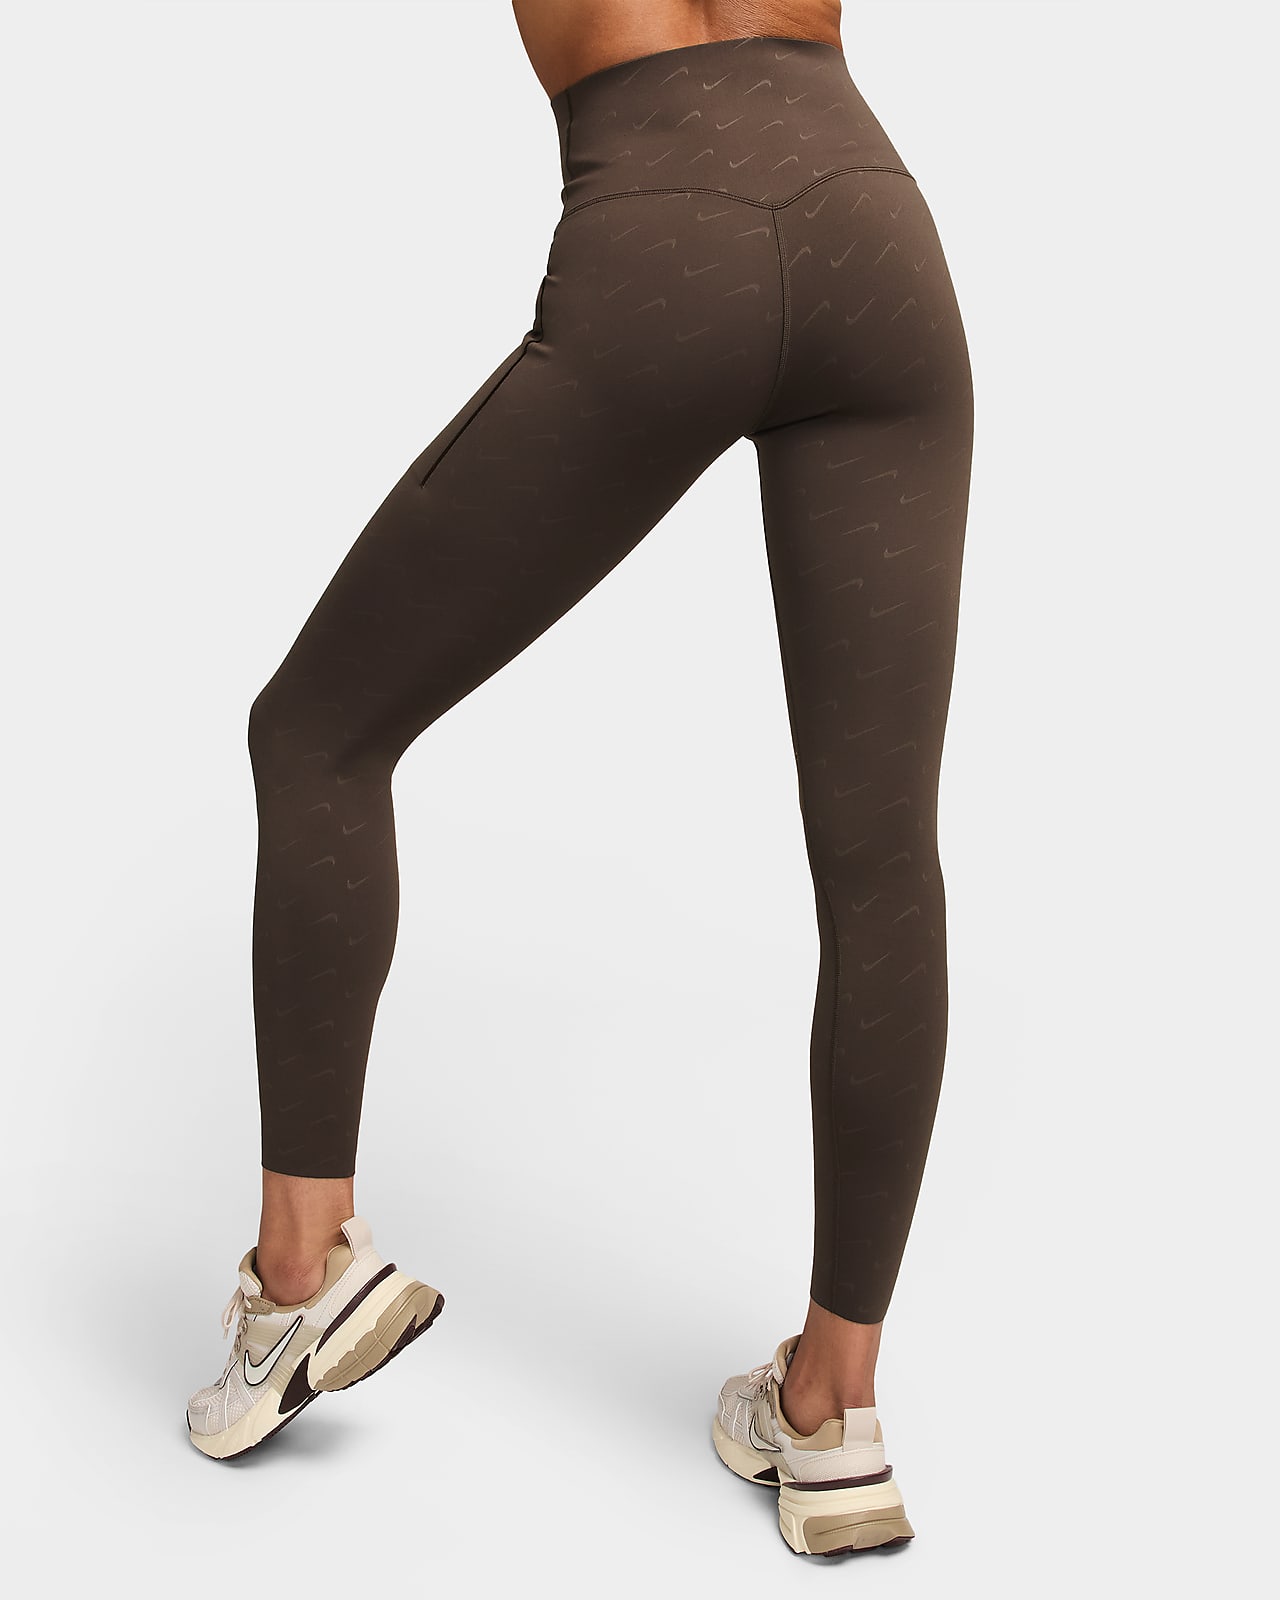 S - XL High Waist Leggings Women Seamless Yoga Pants With Pockets